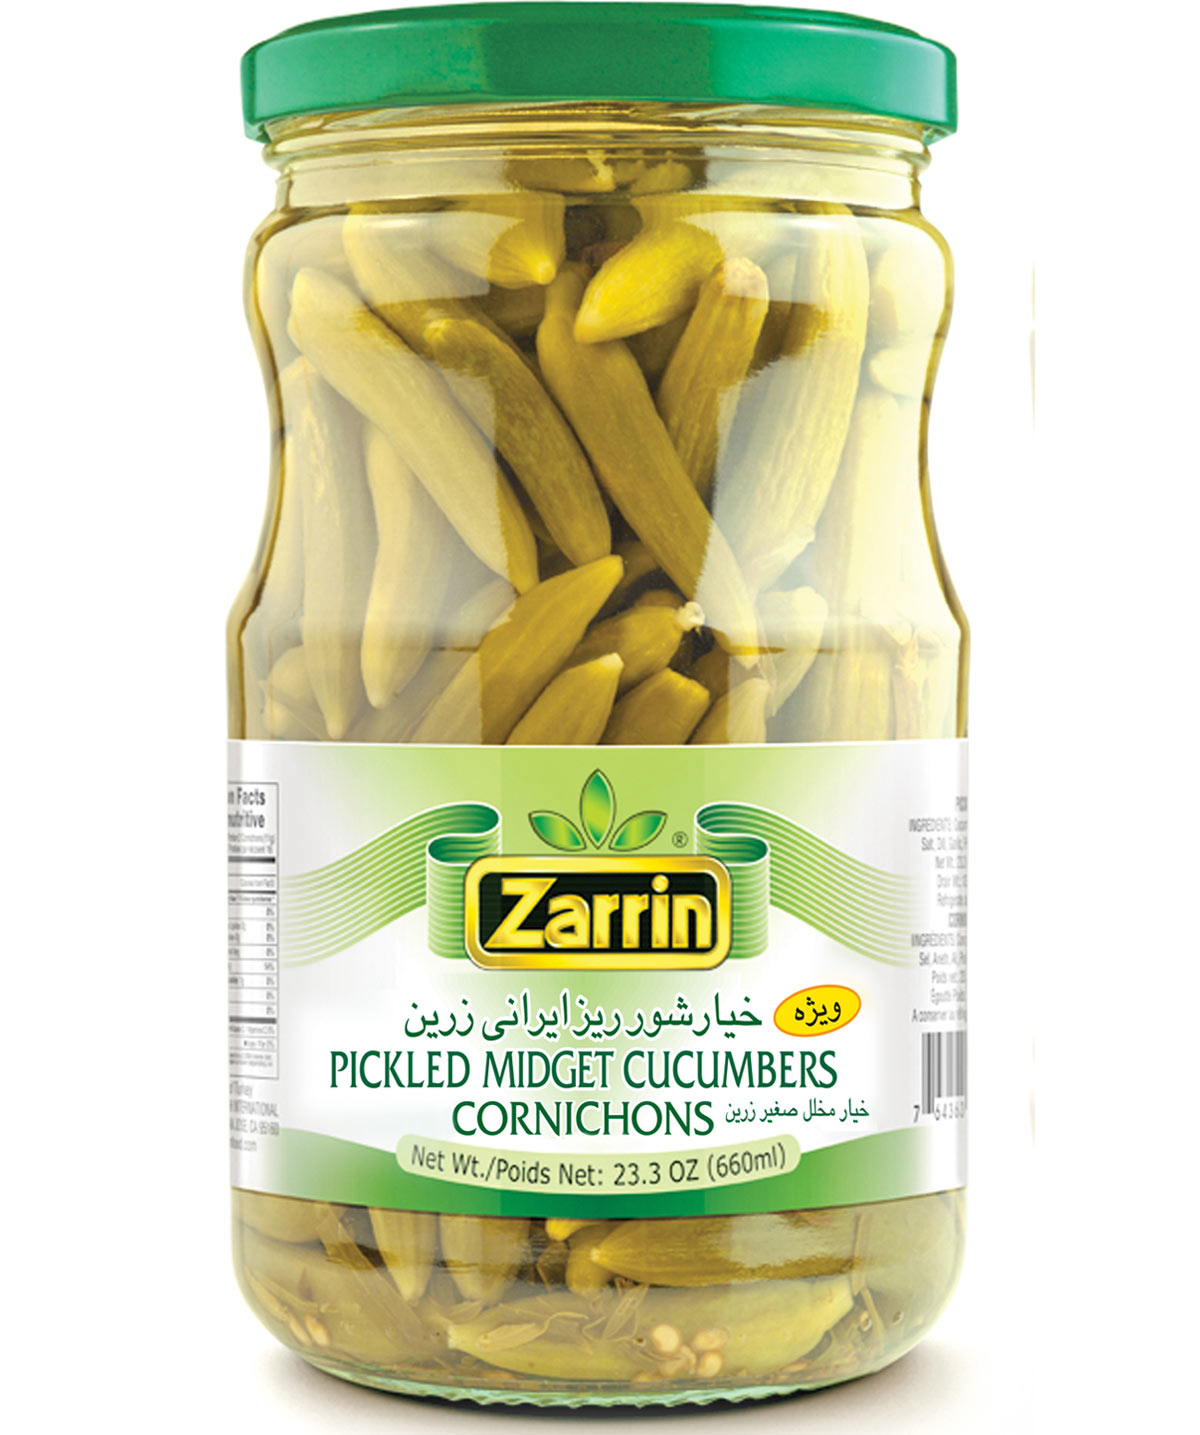 Pickled midget cucumbers in glass jar by Zarrin.